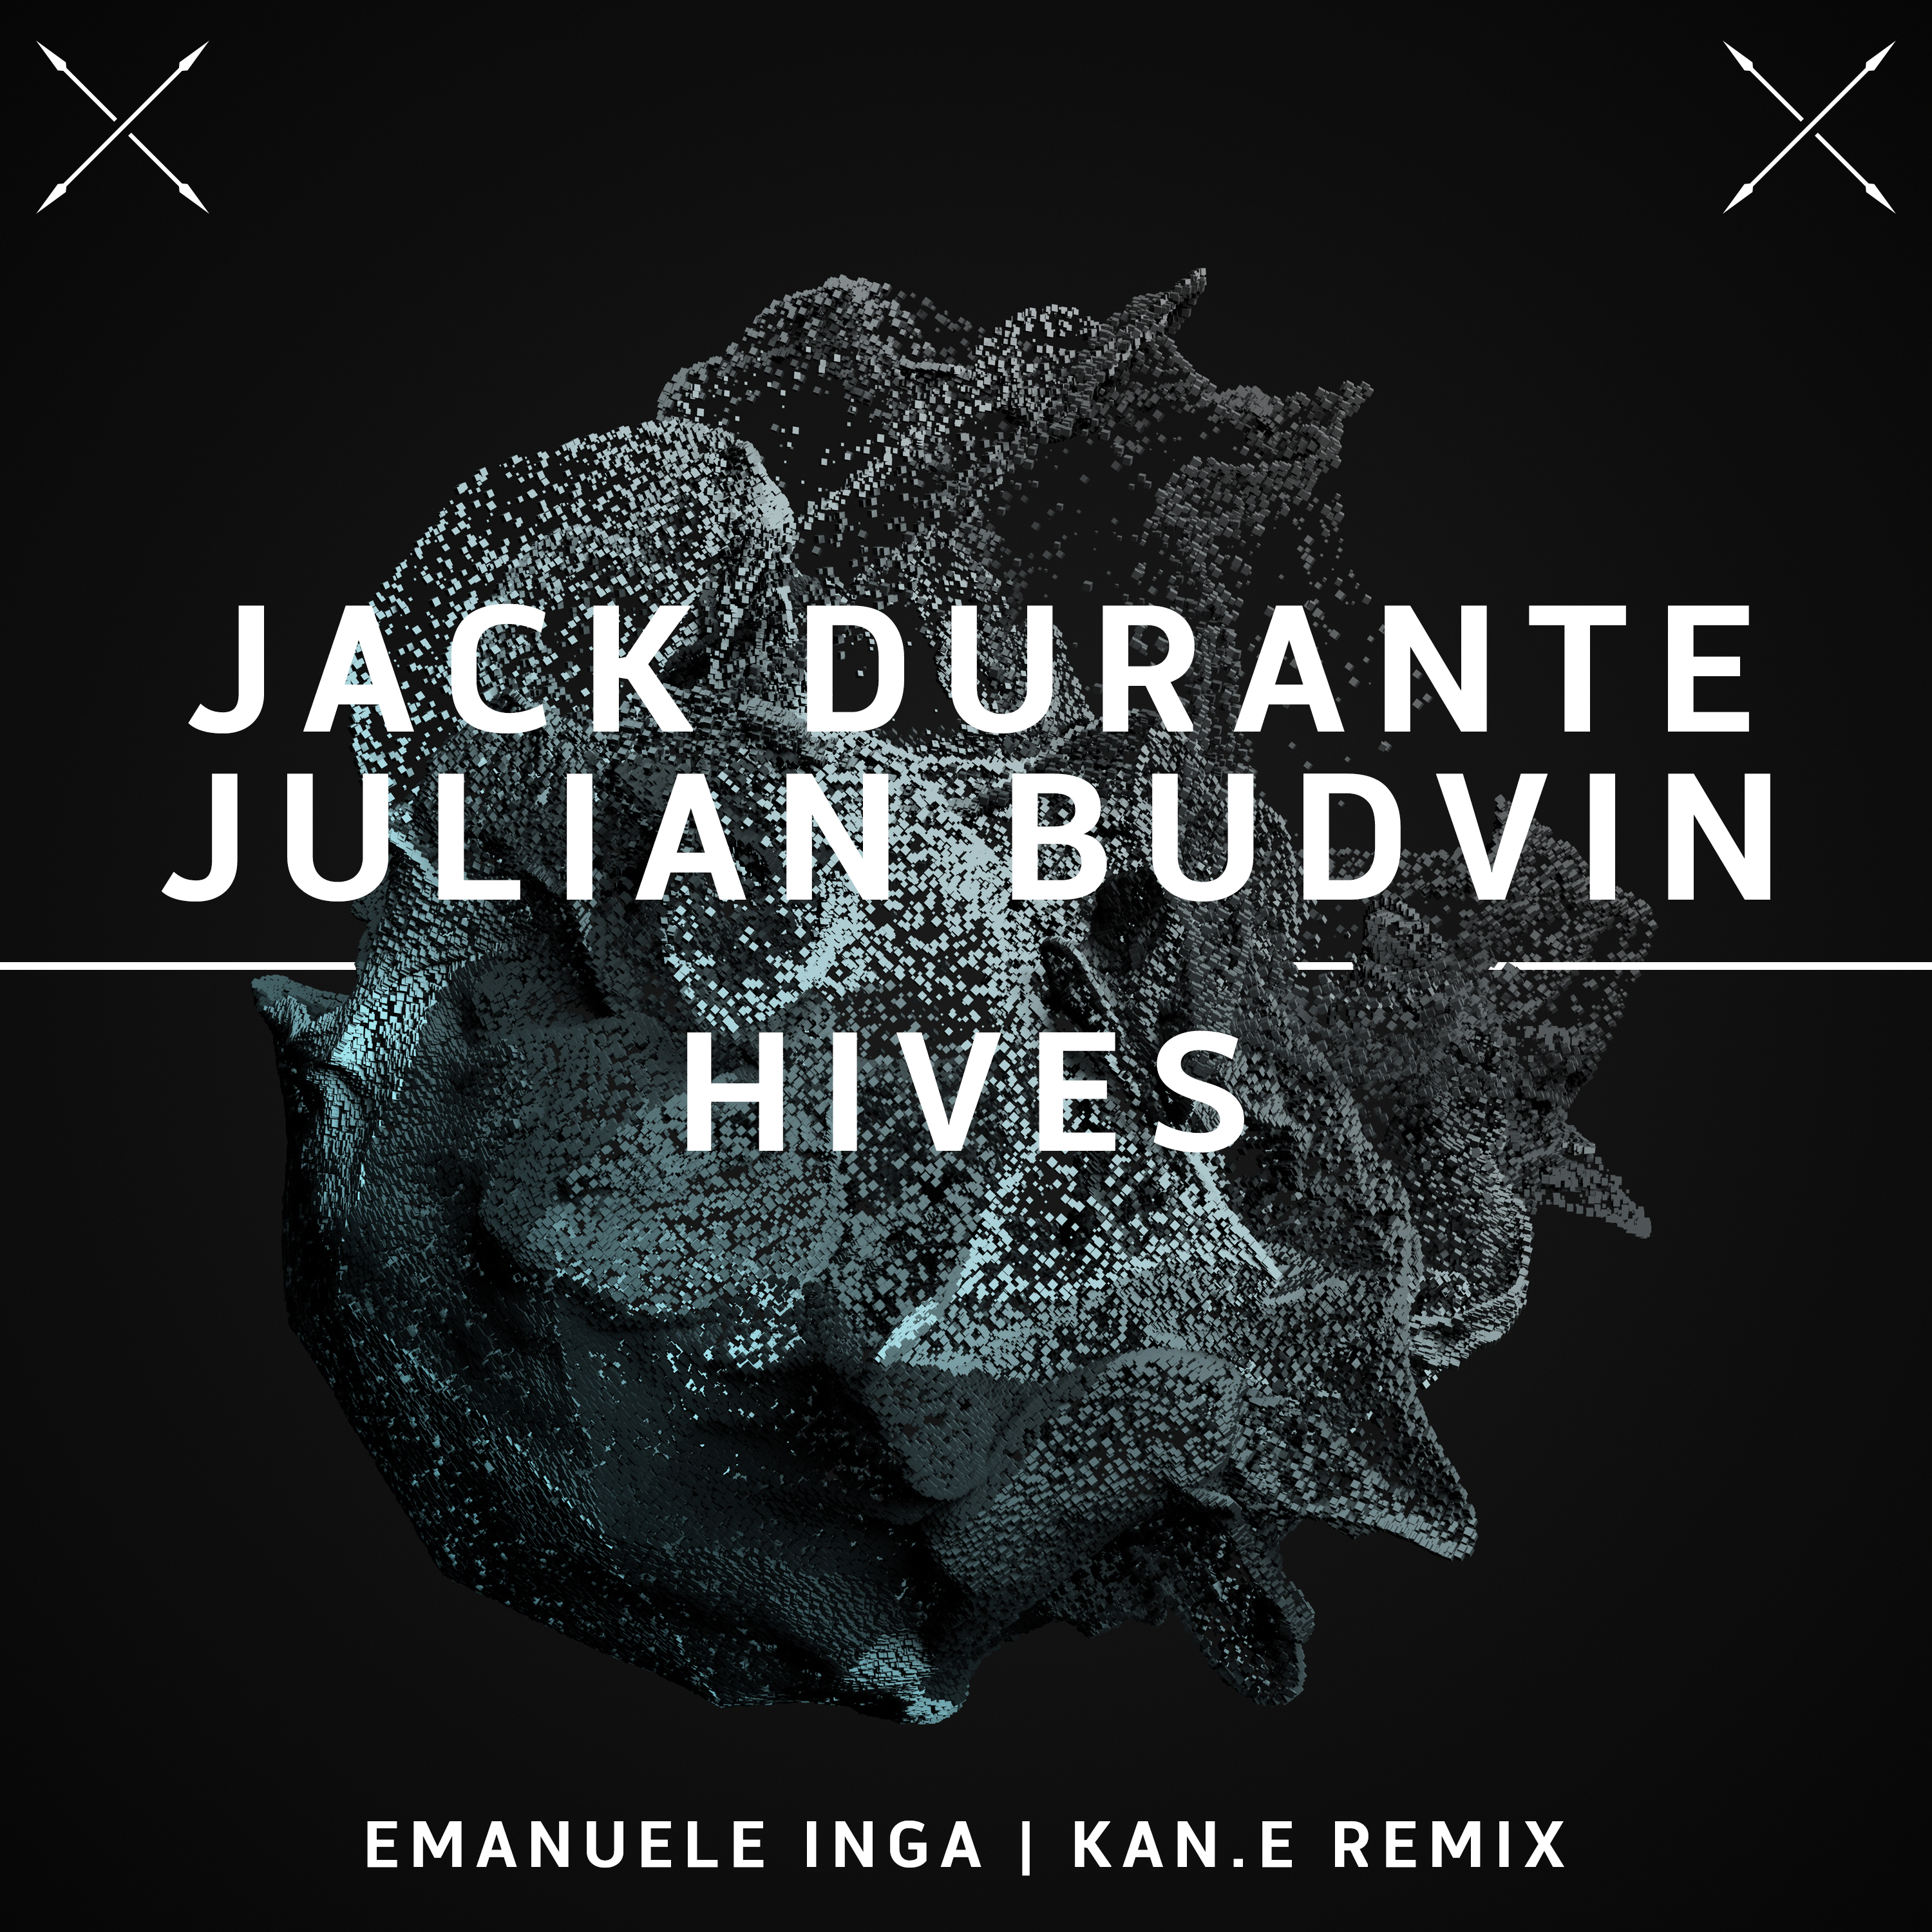 Hives (Emanuele Inga Remix)